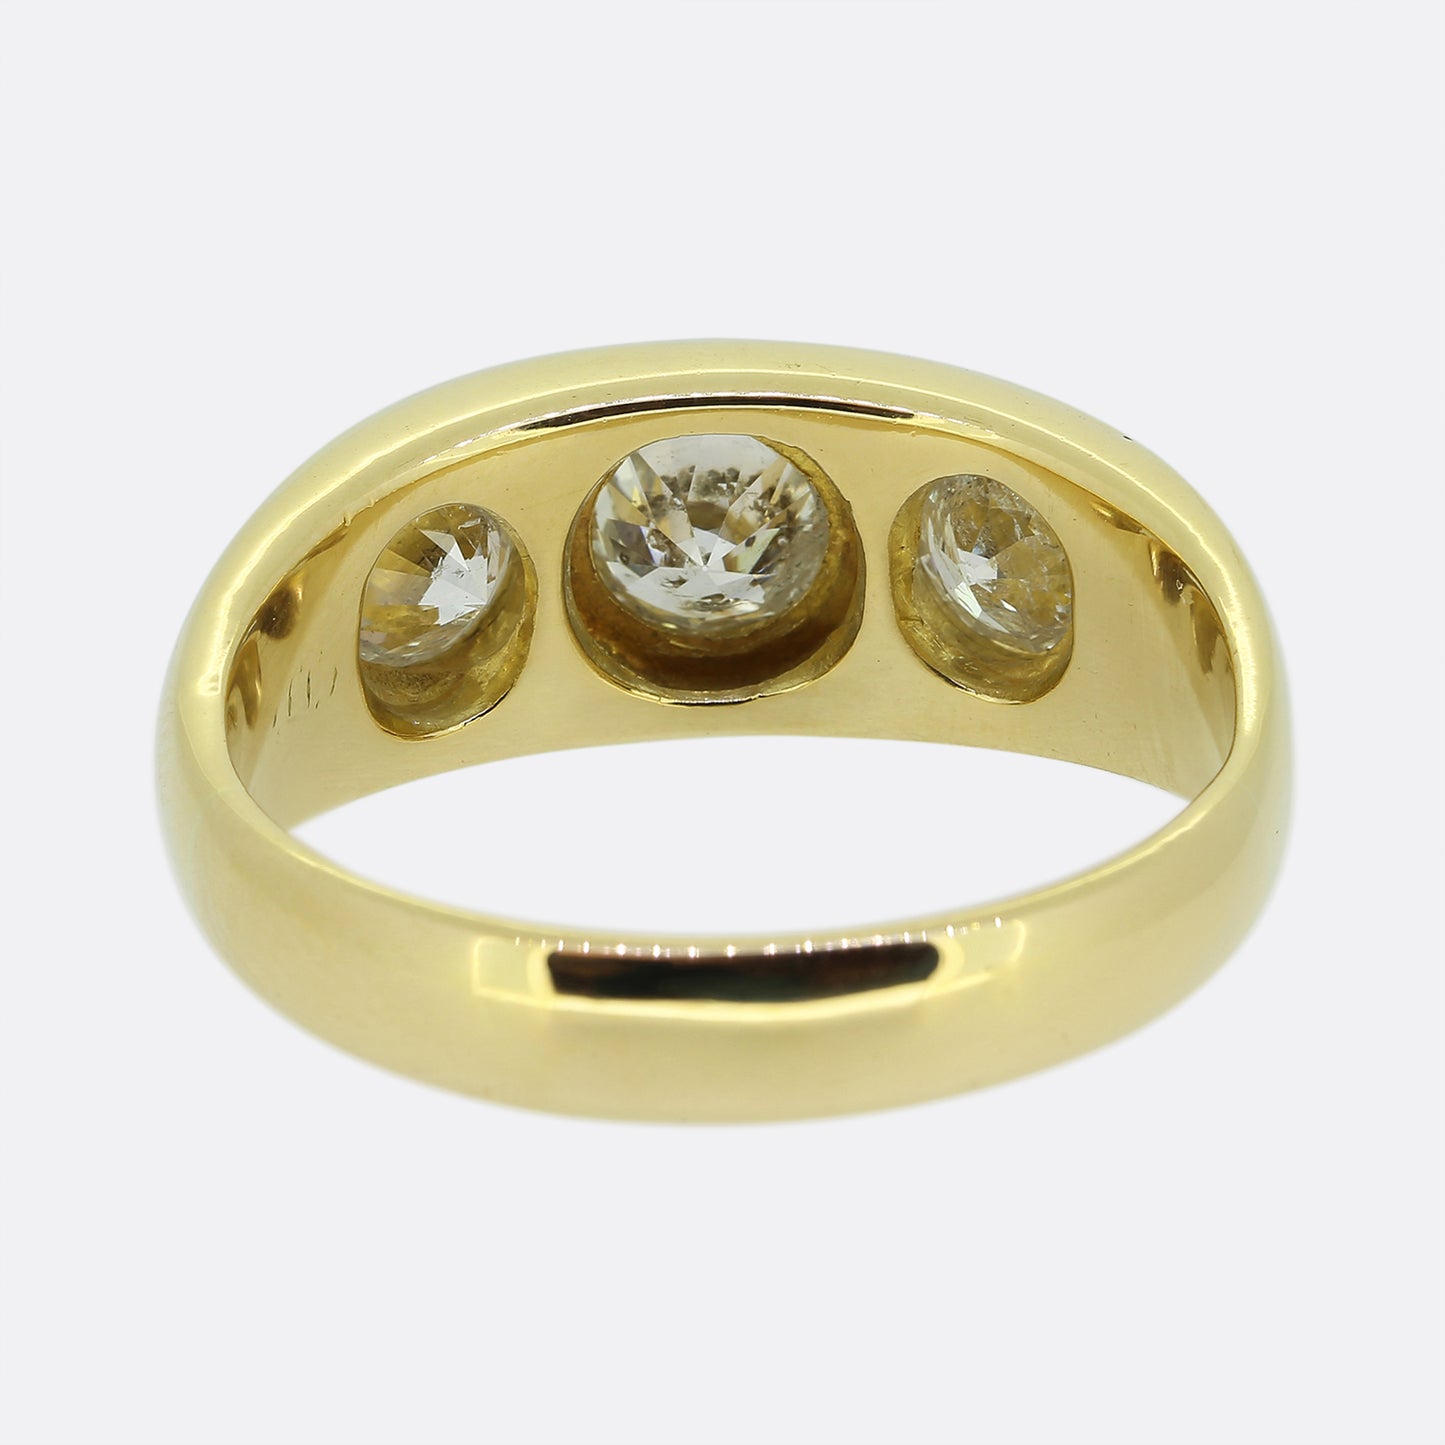 Vintage Old Cut Diamond Three Stone Gypsy Ring